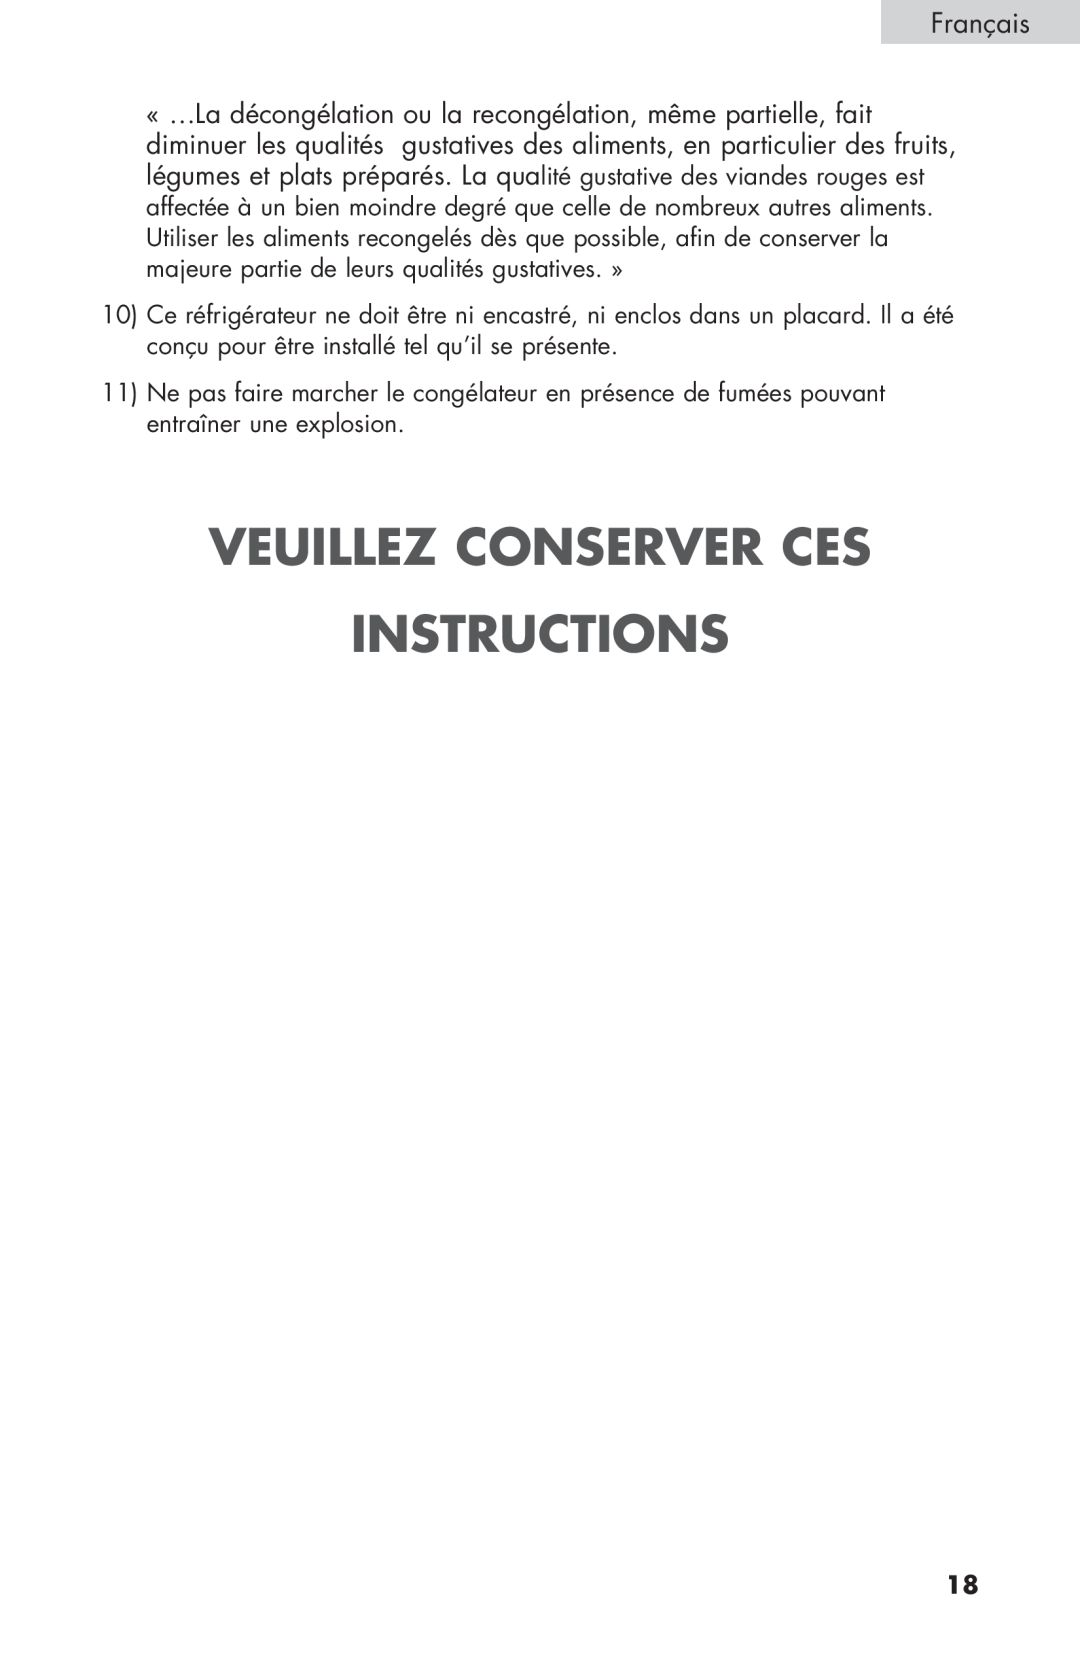 Haier HNSE032, COMPACT REFRIGERATOR manual Veuillez Conserver Ces Instructions 